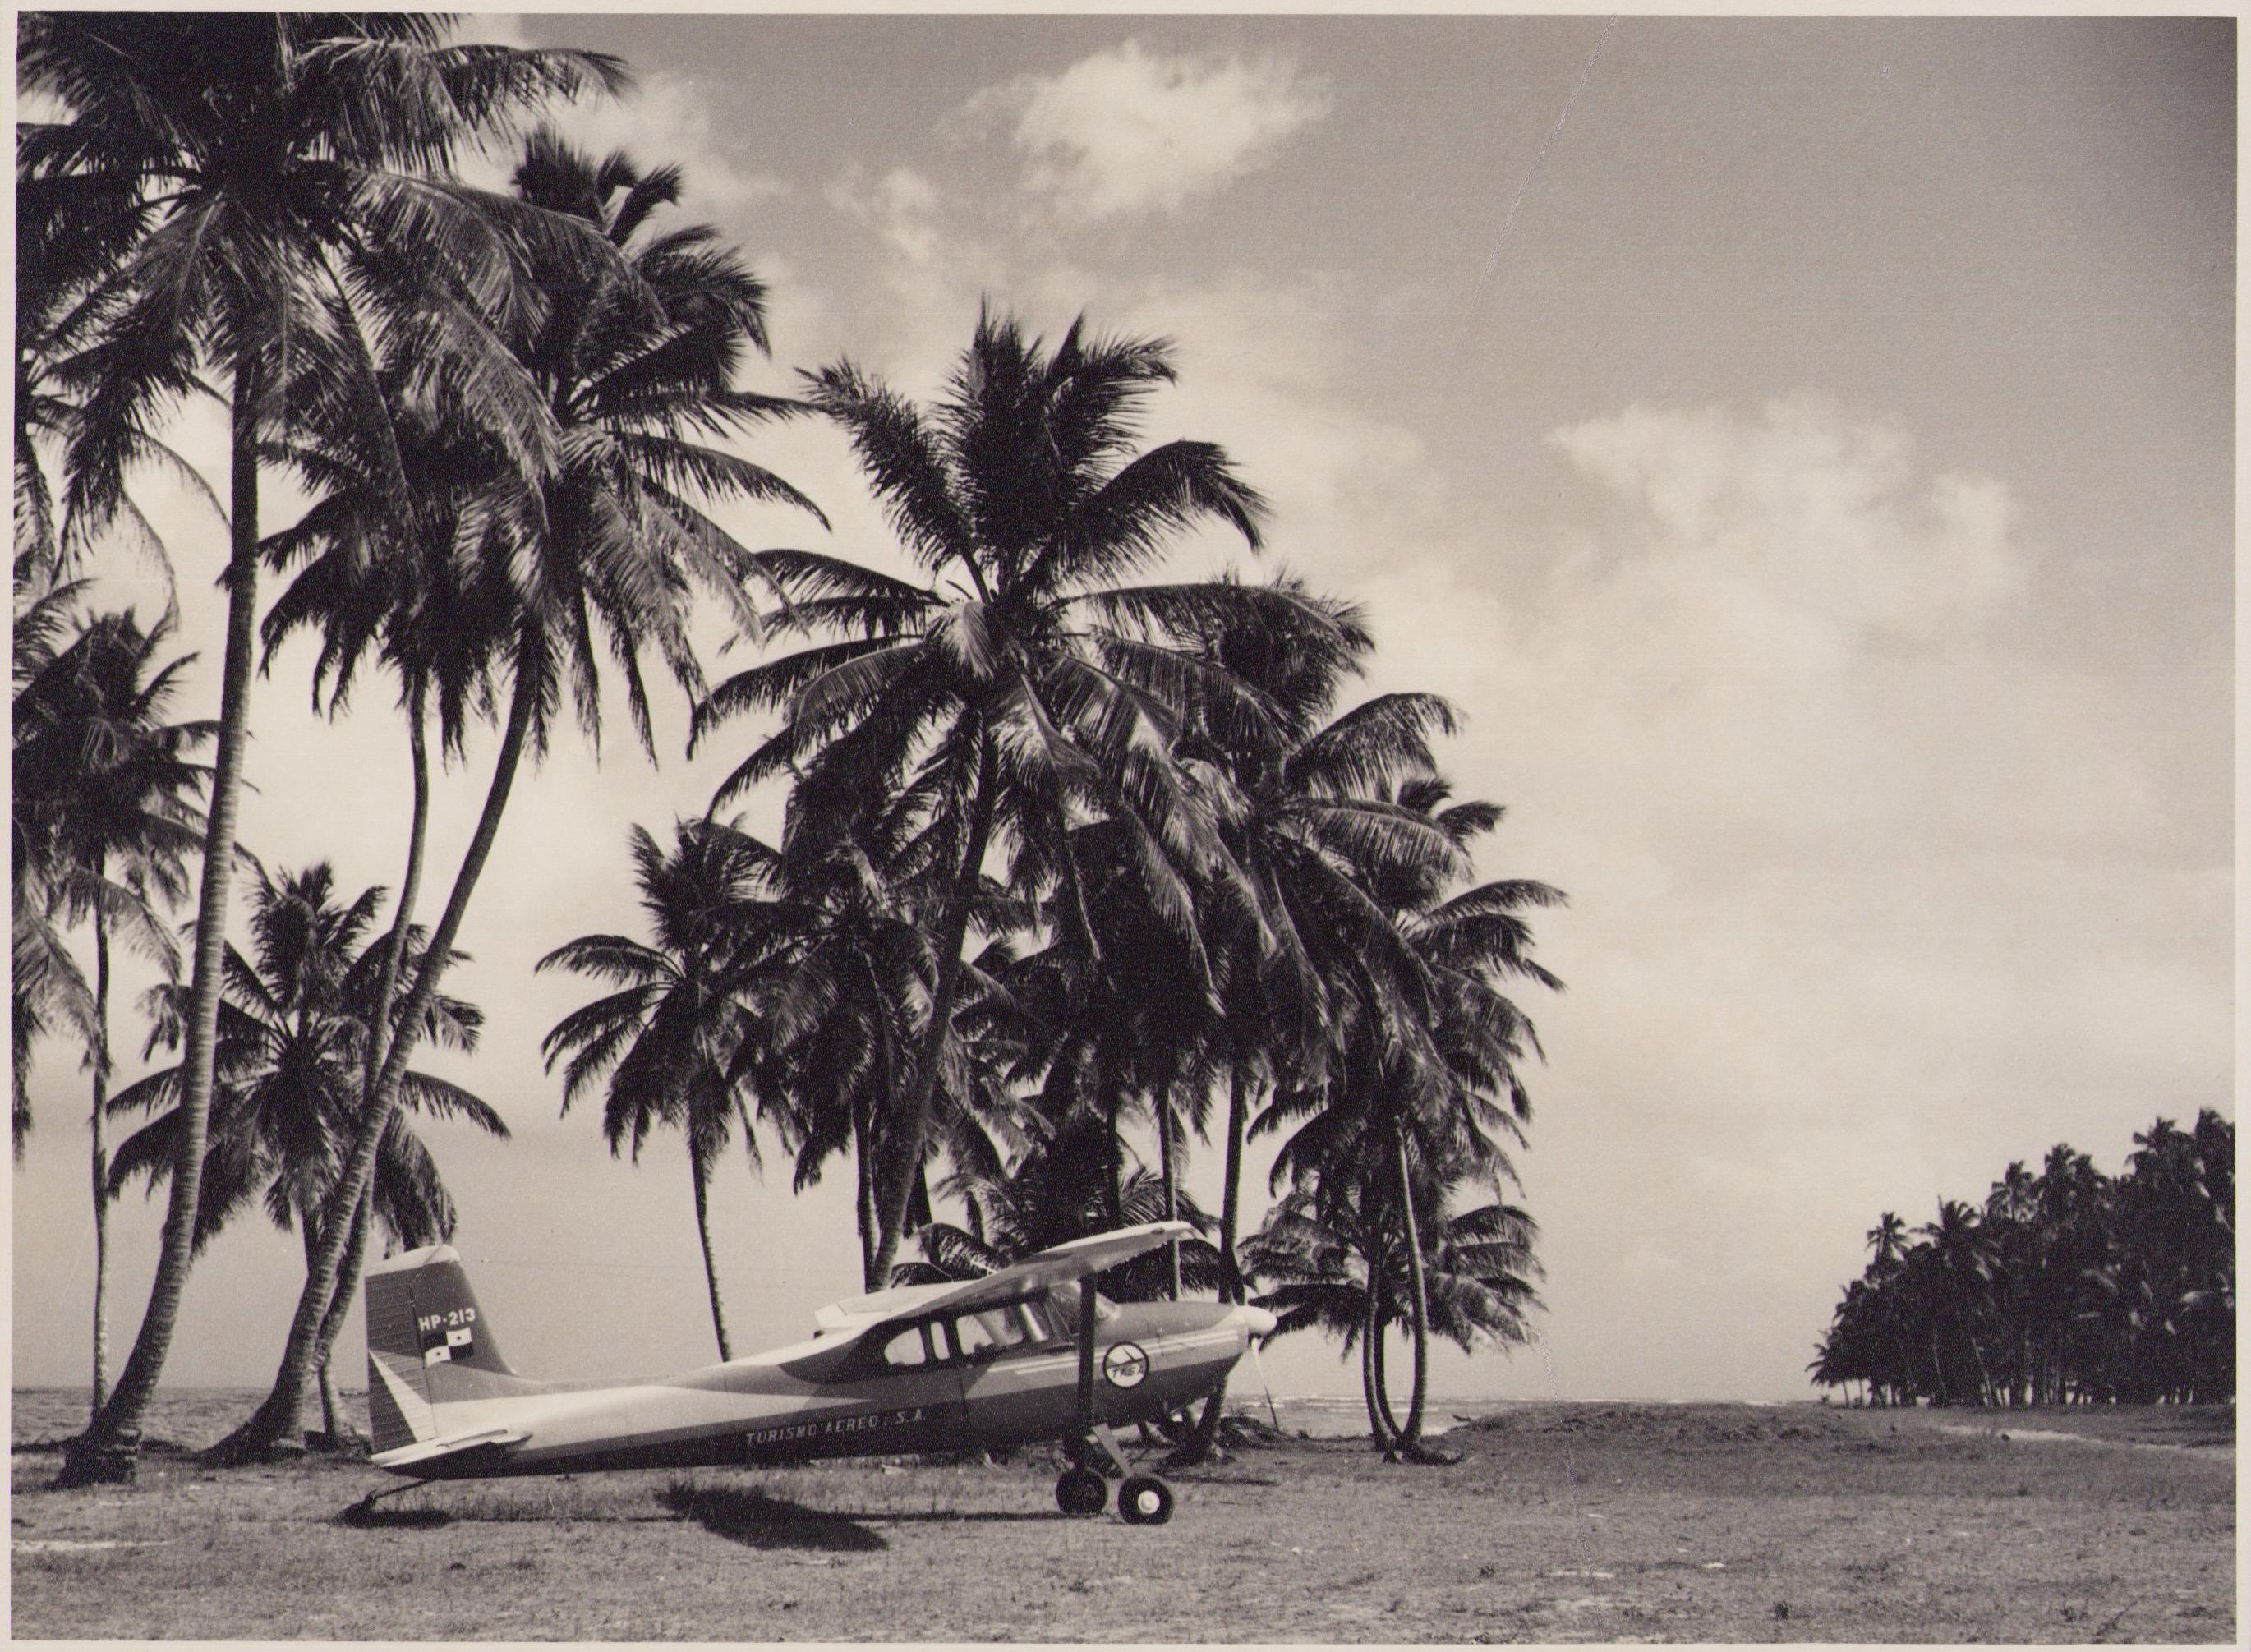 Panama, Airplane, Black and White Photography, 1960s, 17, 2 x 23, 2 cm